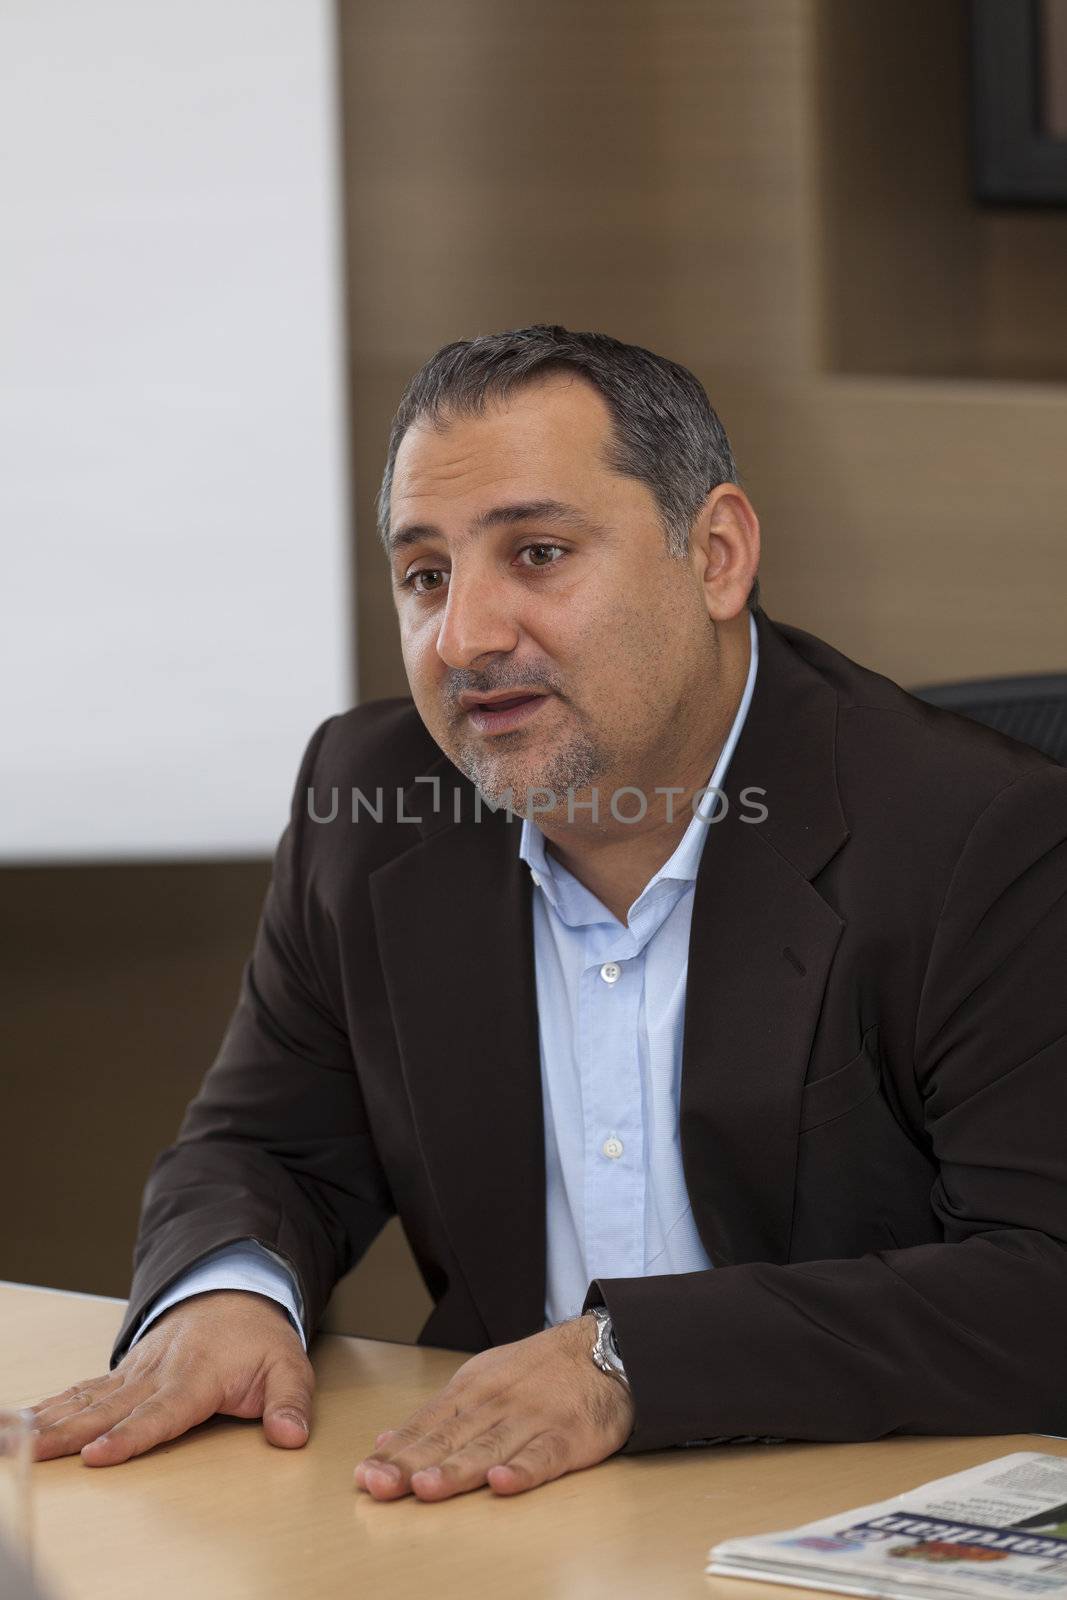 SMART CITY, MALTA - 6 JUN - Smart City Malta CEO Fareed Abdulrahman during an interview at Smart City Malta